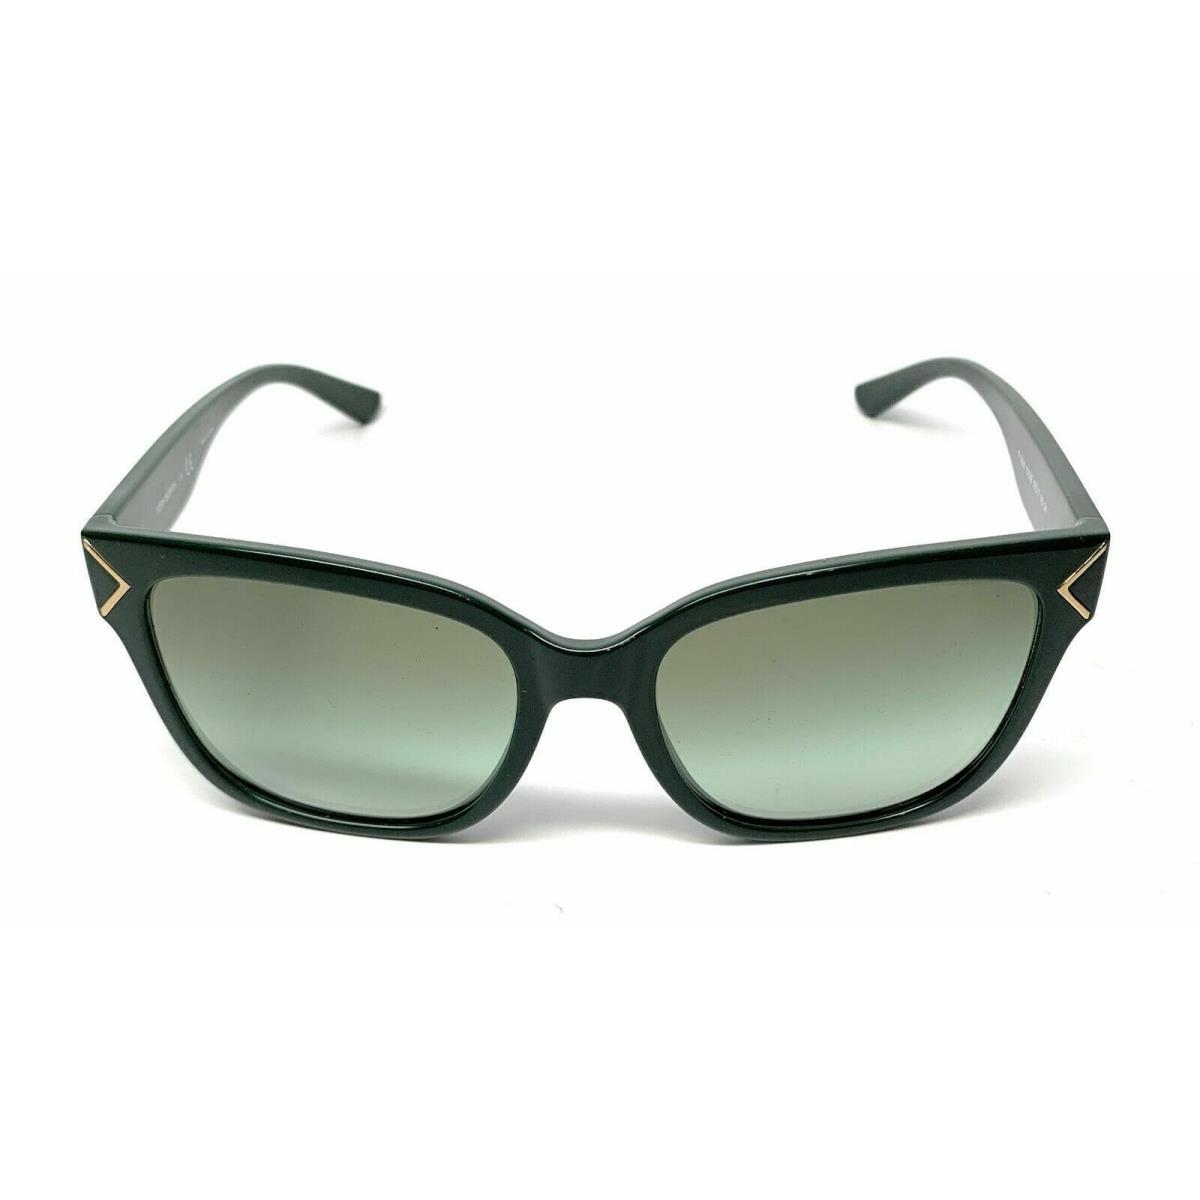 Tory Burch Sunglasses TY9050 15258E Black Frames Green Lens 55mm ST